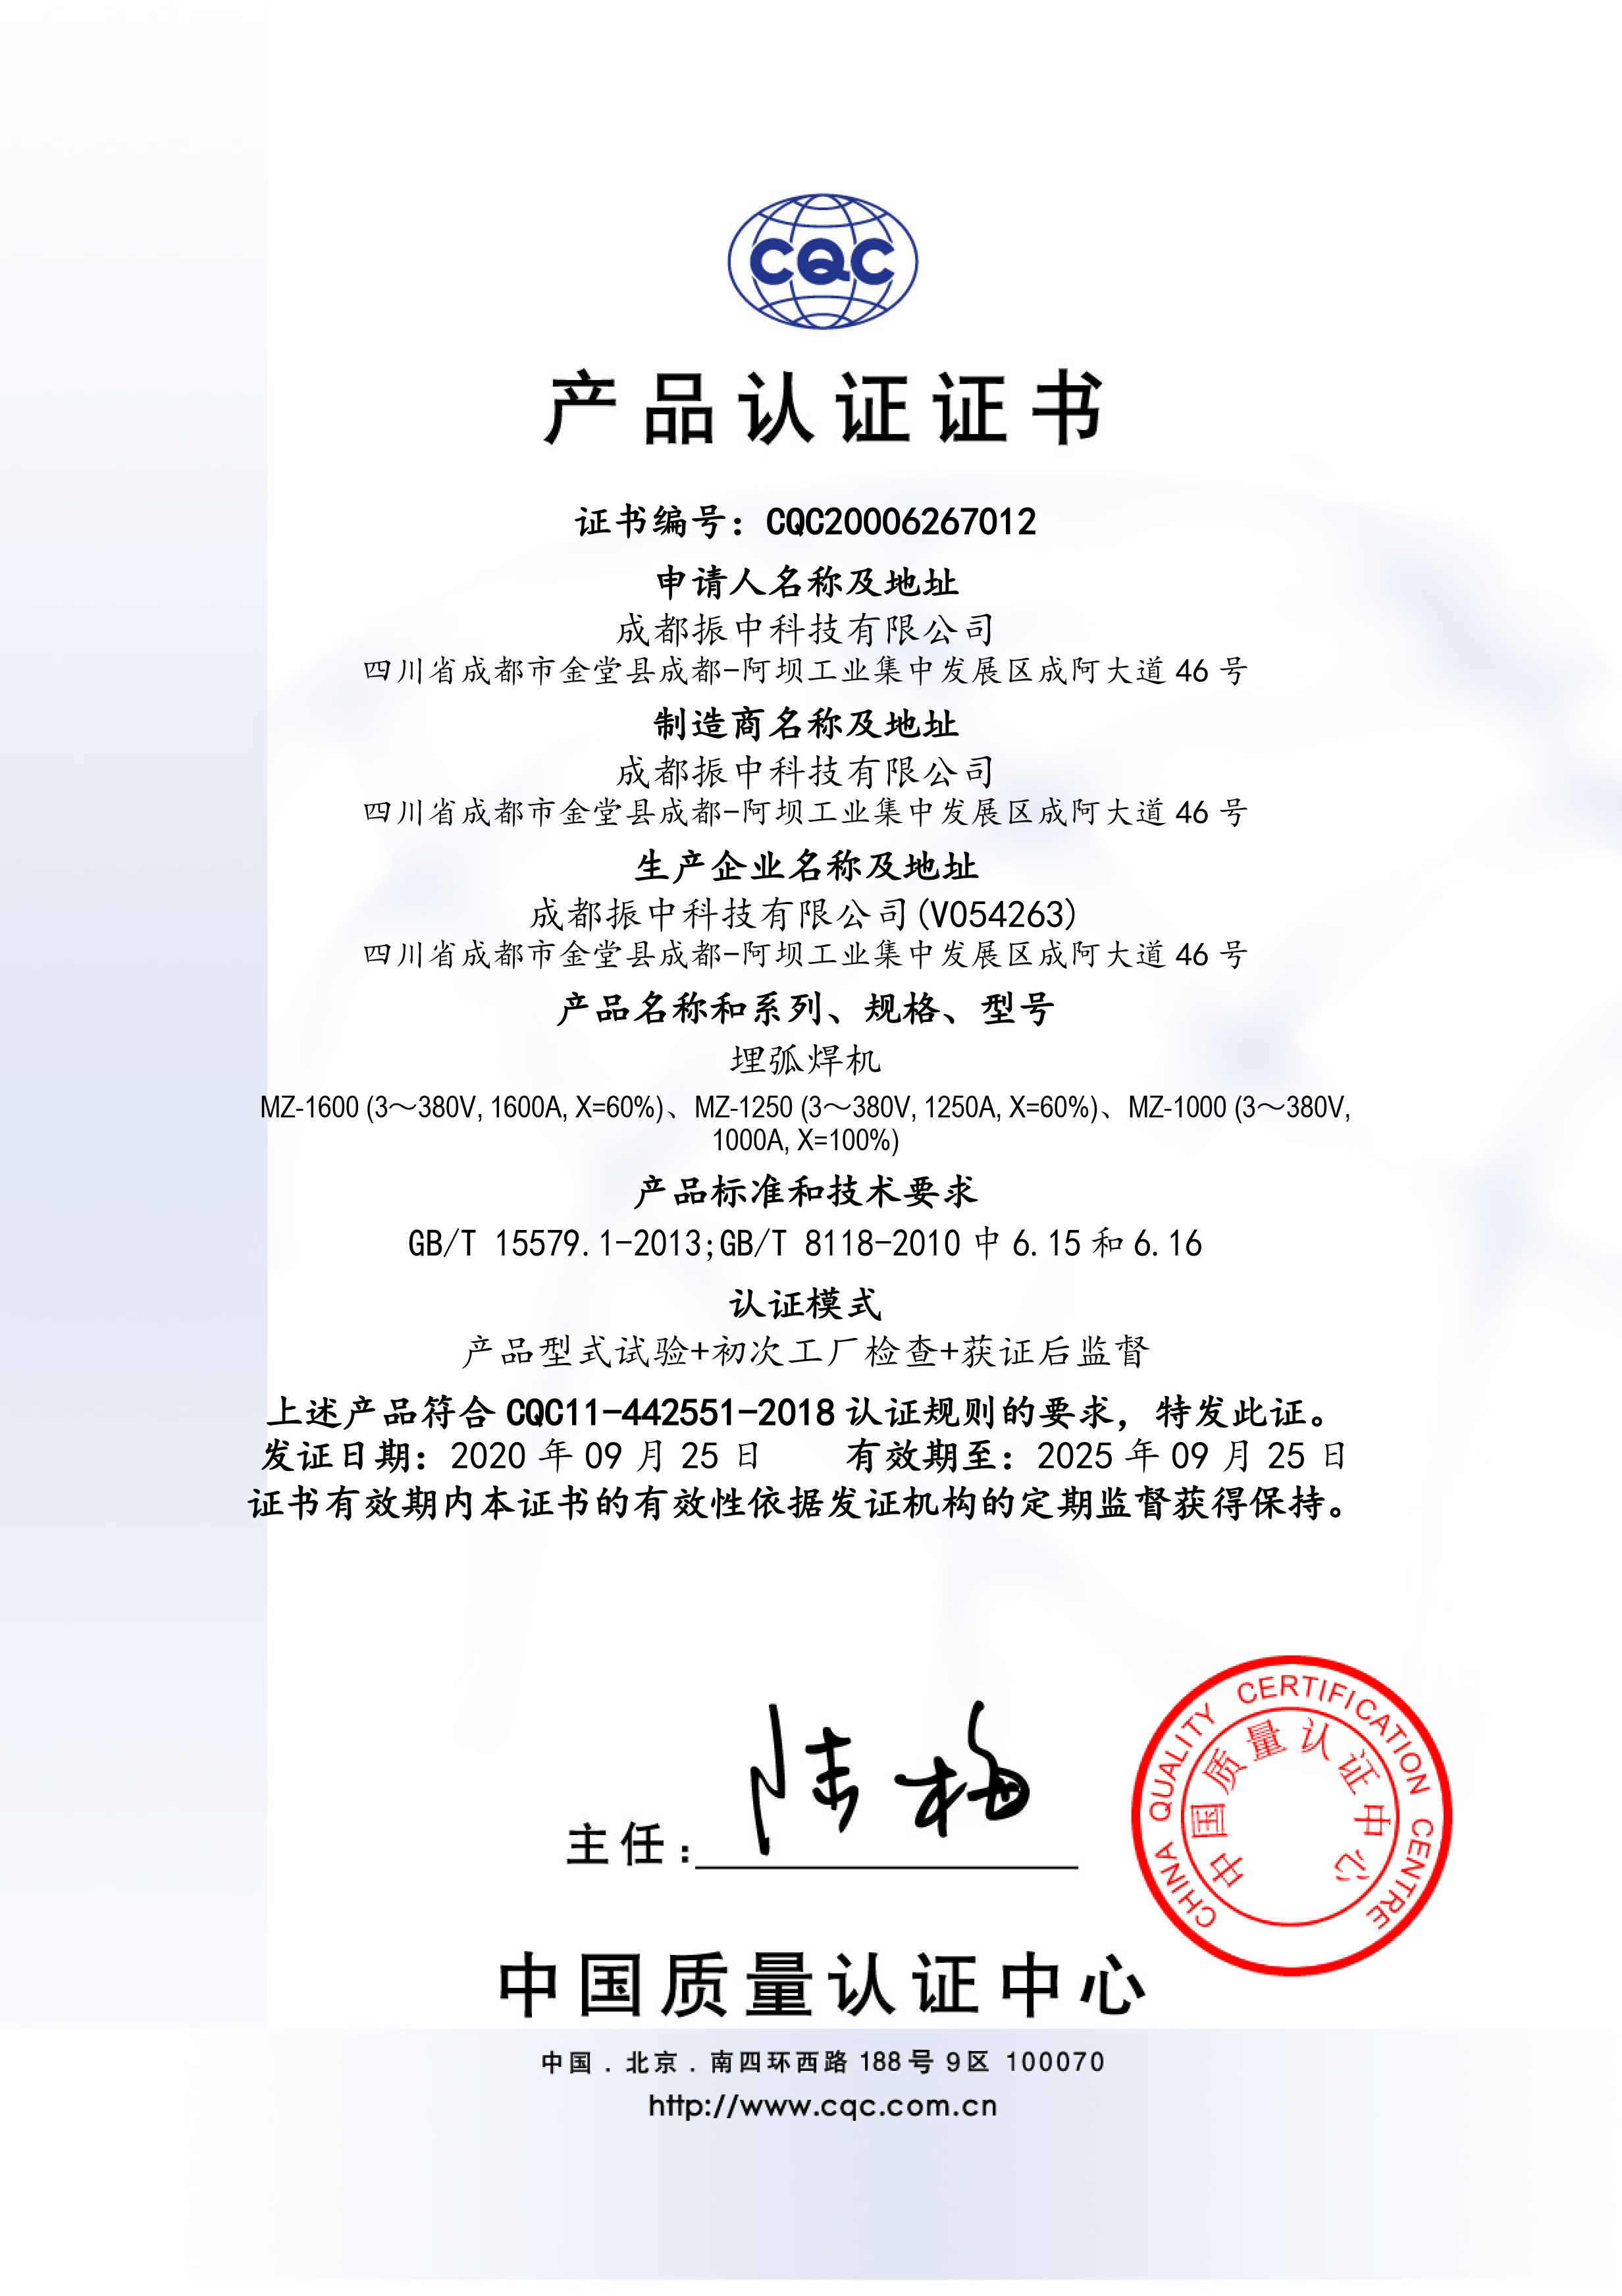 MZ自动埋弧焊机CQC证书中文版